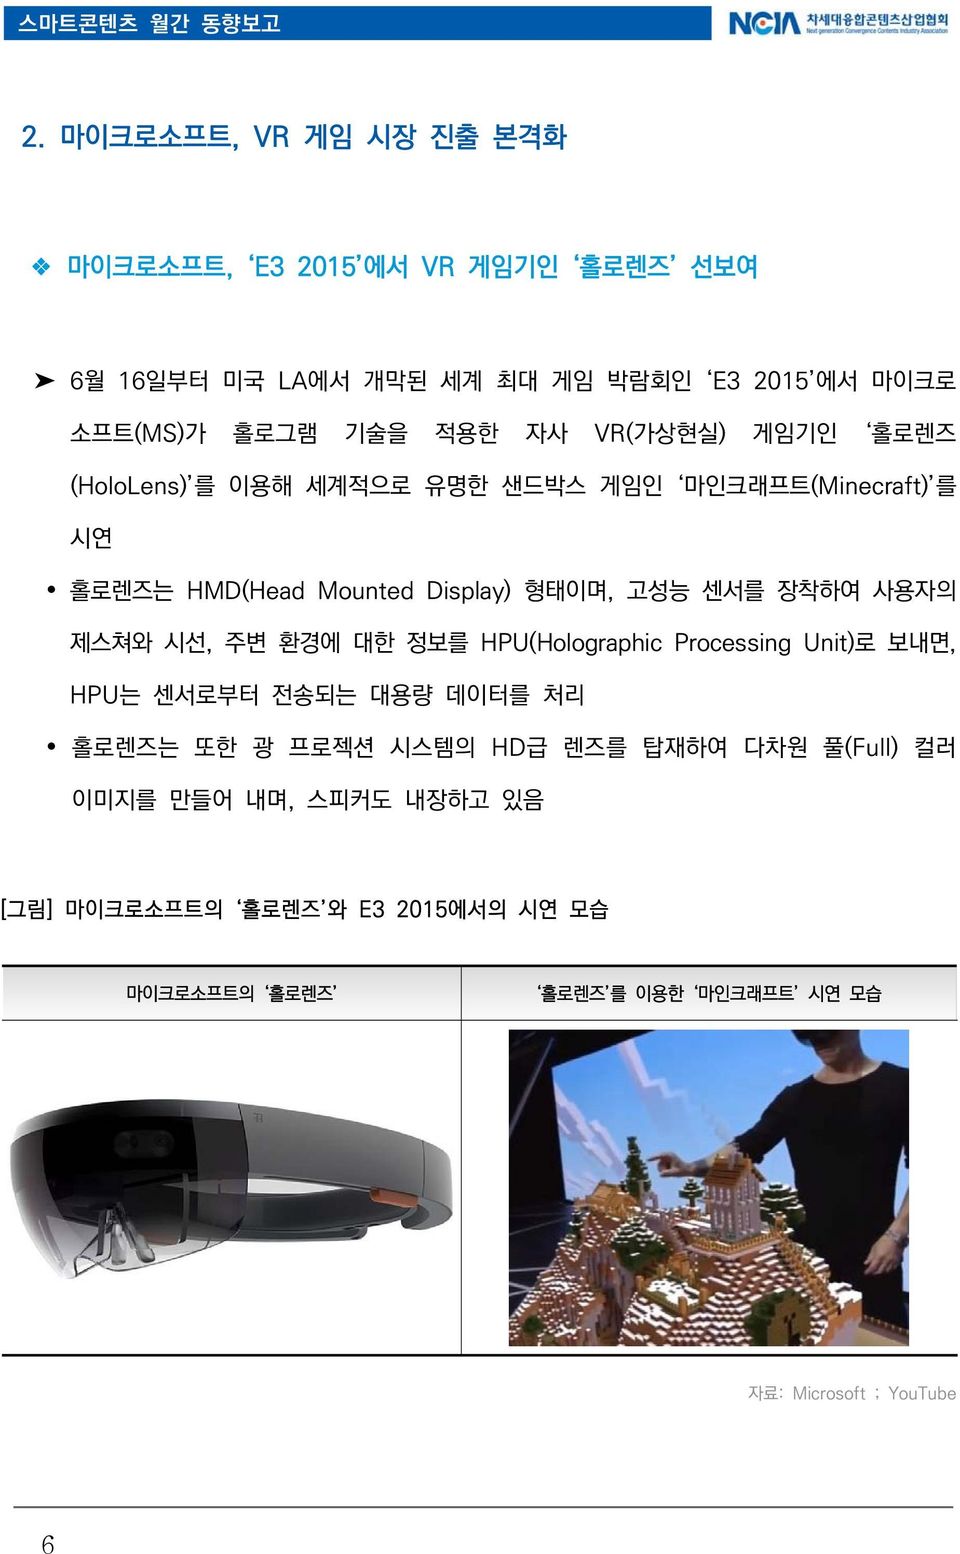 VR(가상현실) 게임기인 홀로렌즈 (HoloLens) 를 이용해 세계적으로 유명한 샌드박스 게임인 마인크래프트(Minecraft) 를 시연 홀로렌즈는 HMD(Head Mounted Display) 형태이며, 고성능 센서를 장착하여 사용자의 제스쳐와